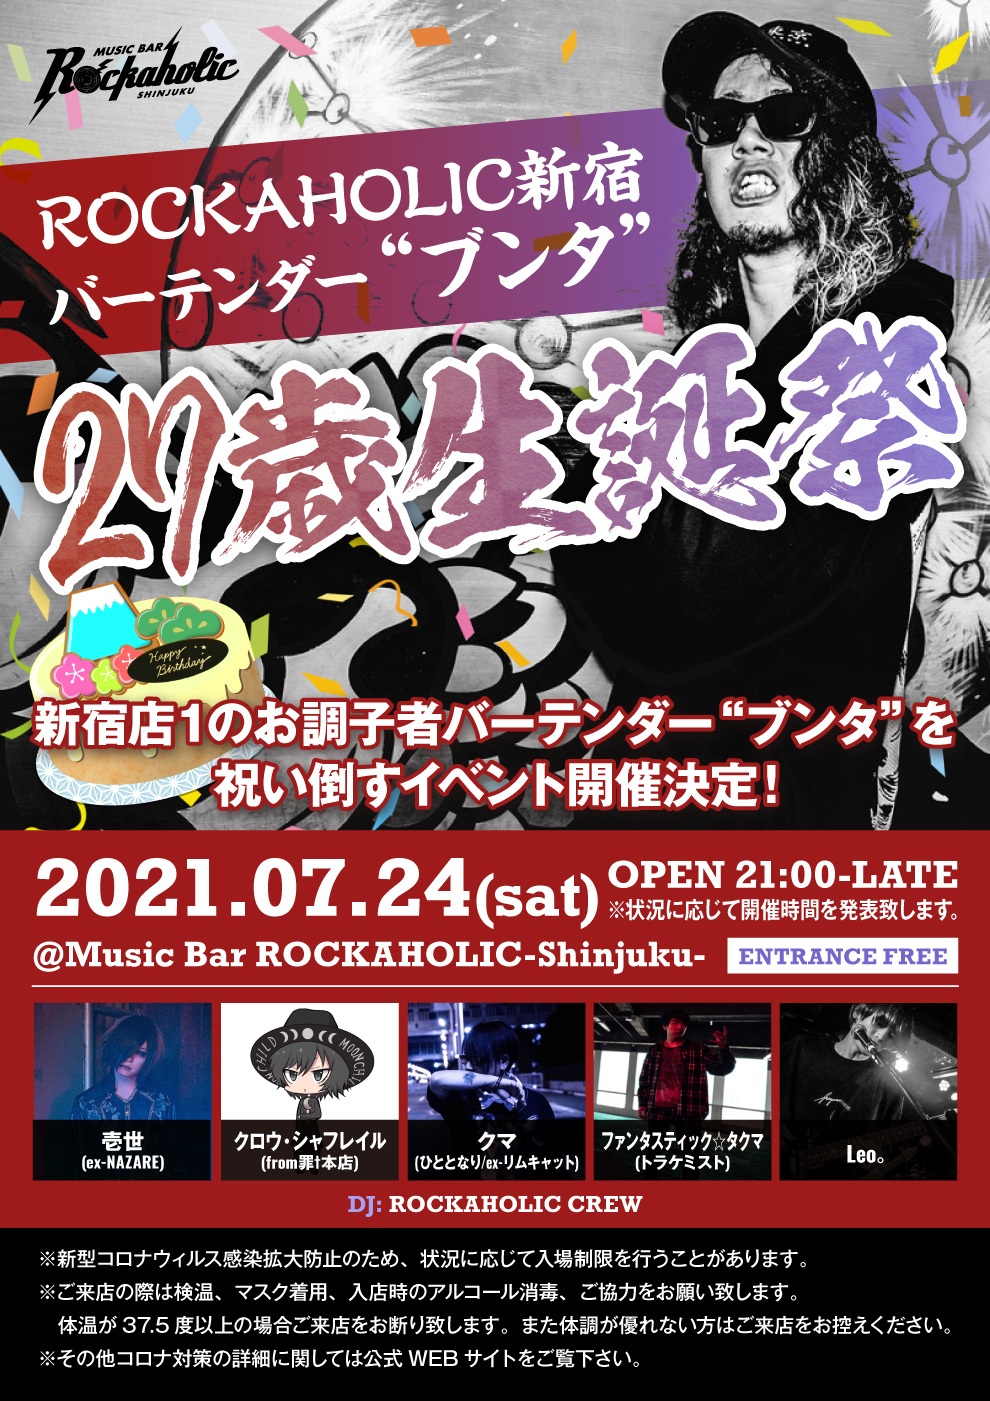 https://bar-rockaholic.jp/shibuya/blog/8B5F83E8-90B1-422D-9F3B-F137E8BA5CF9.jpeg